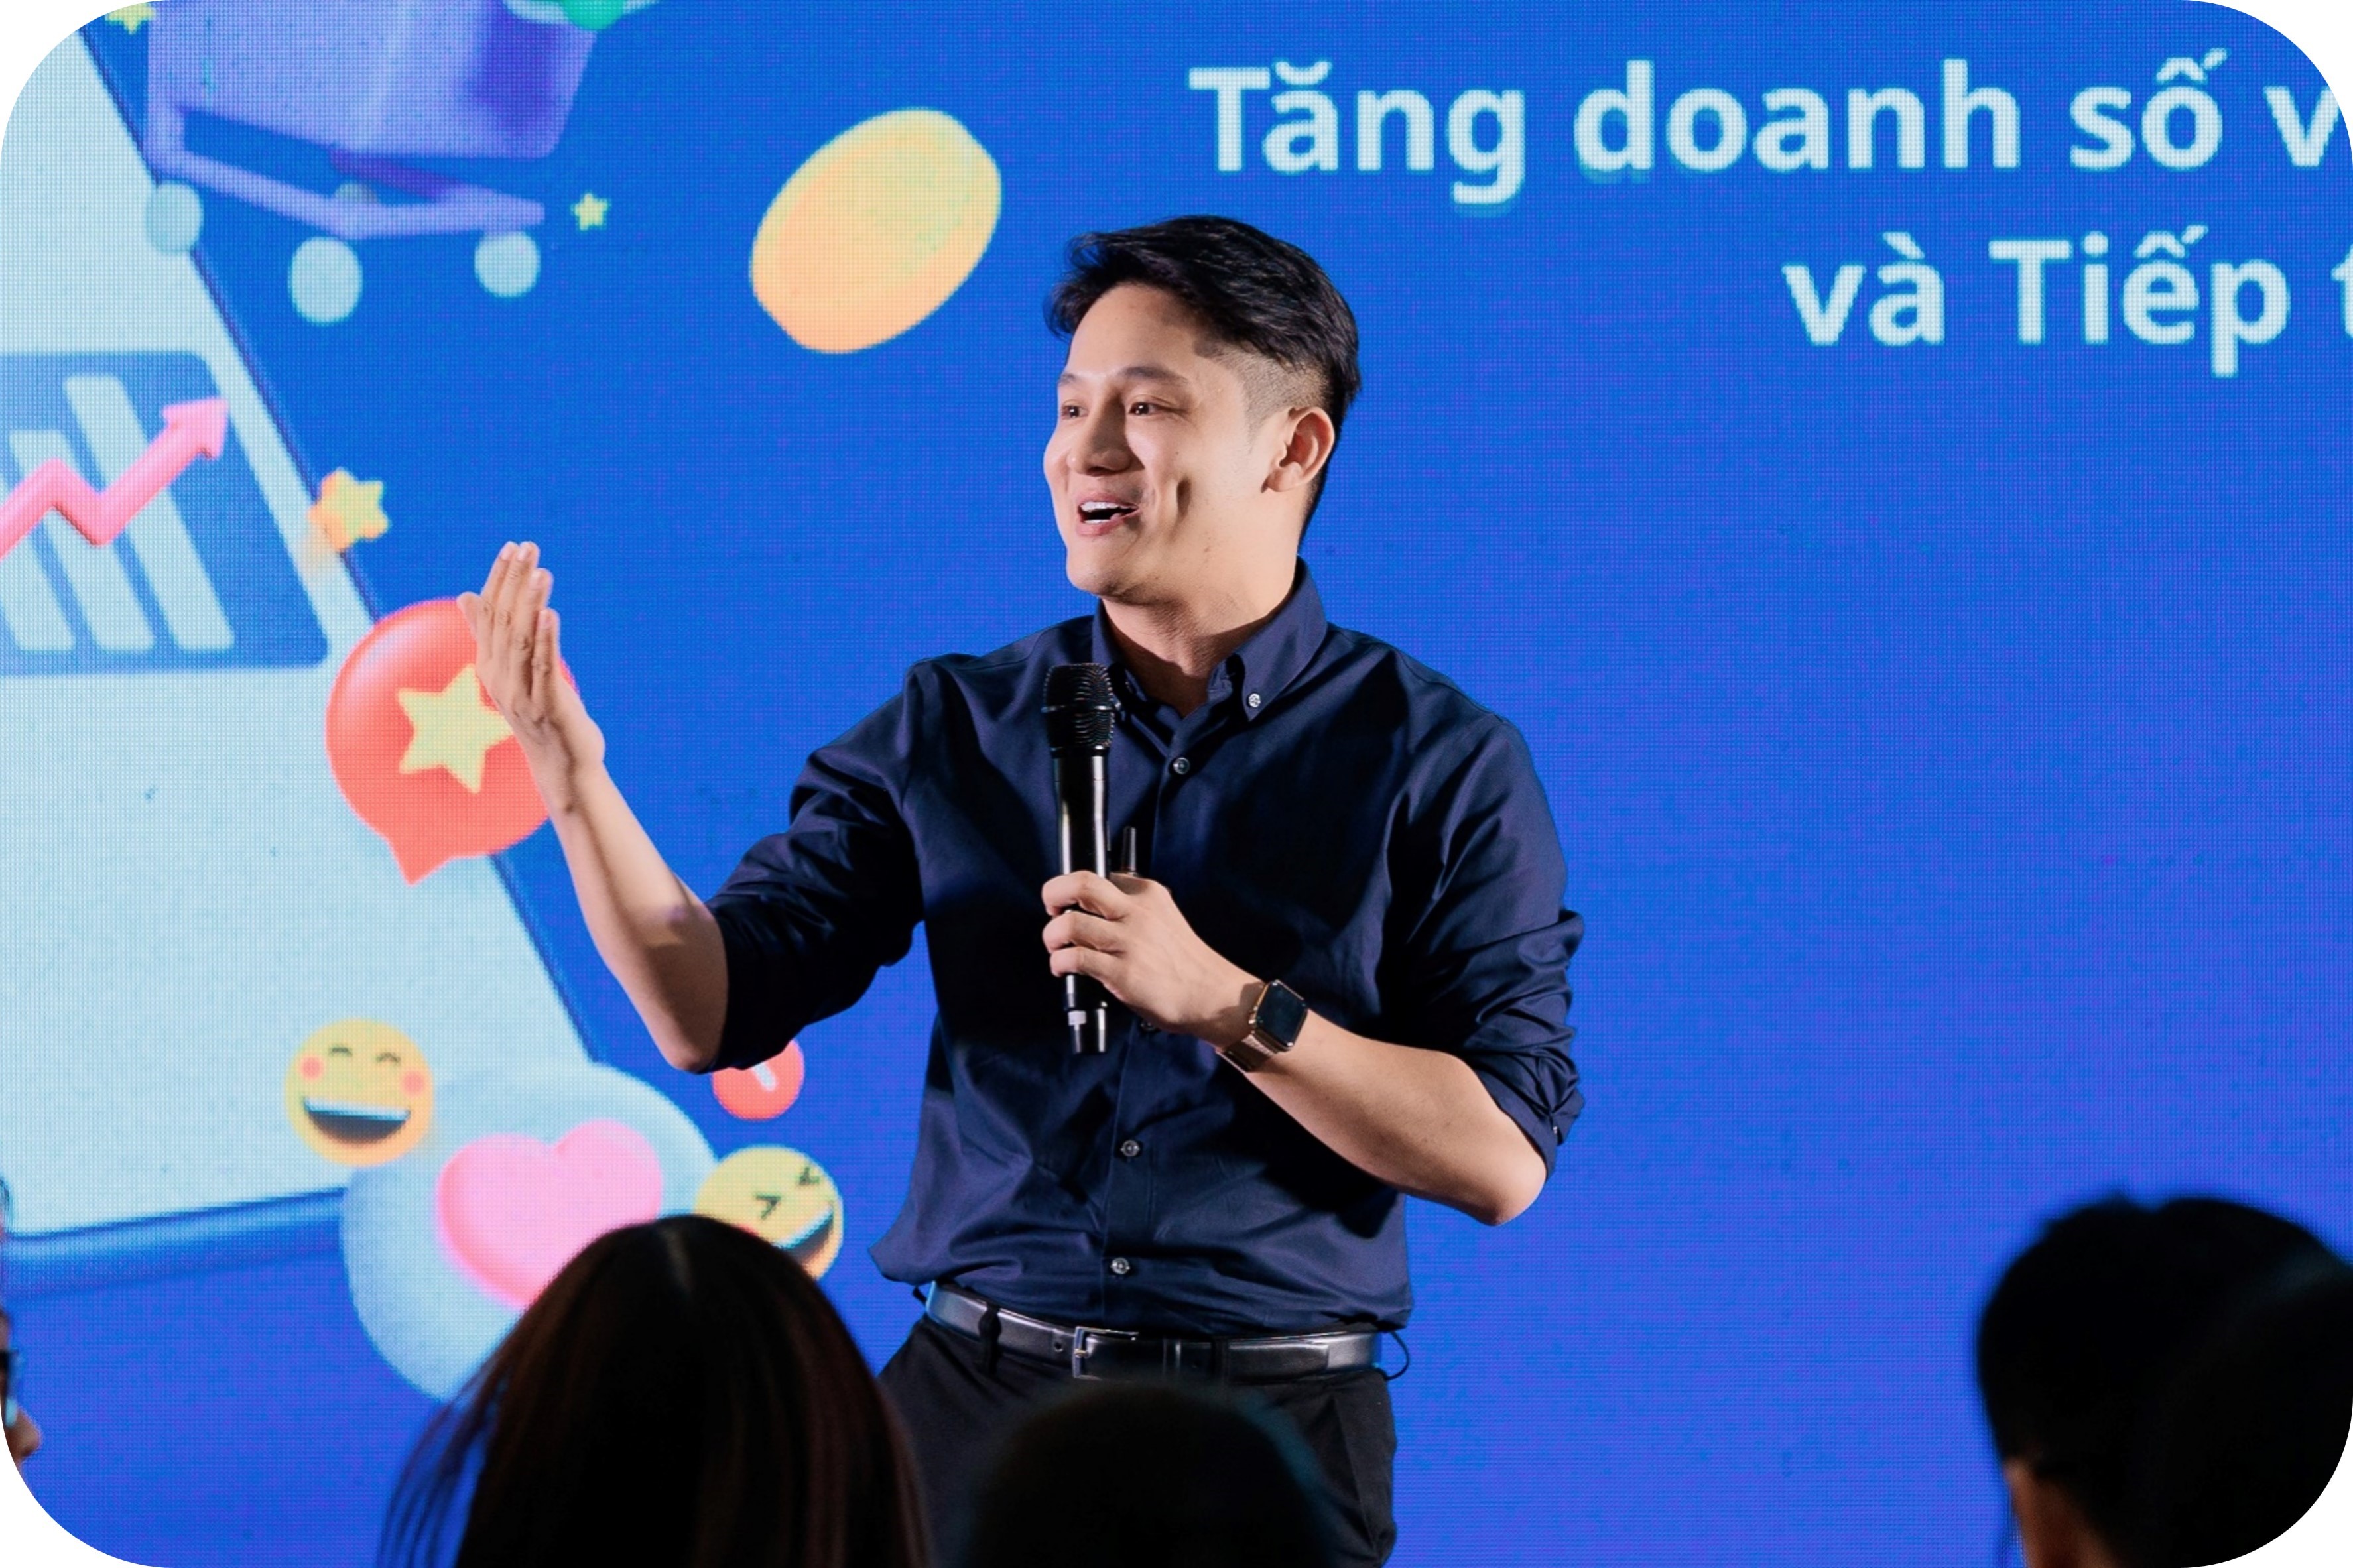 Ftu Le Giang Nam - Xin Chào Smes: Grow Your Sales Through E-Commerce And Digital Marketing 2023 Recap